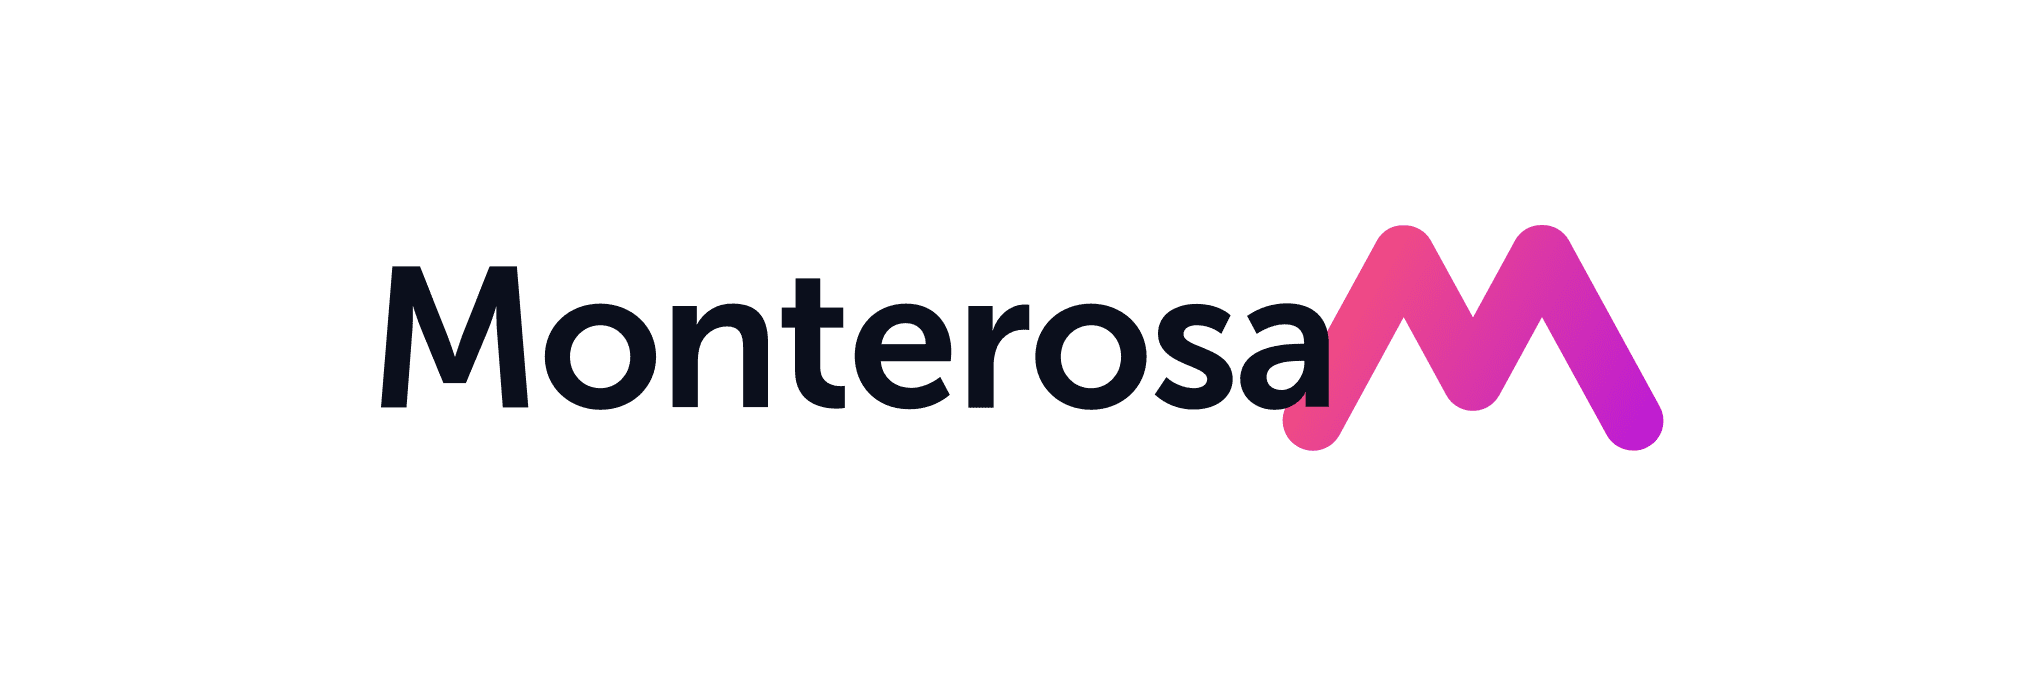 Monterosa Logo.png